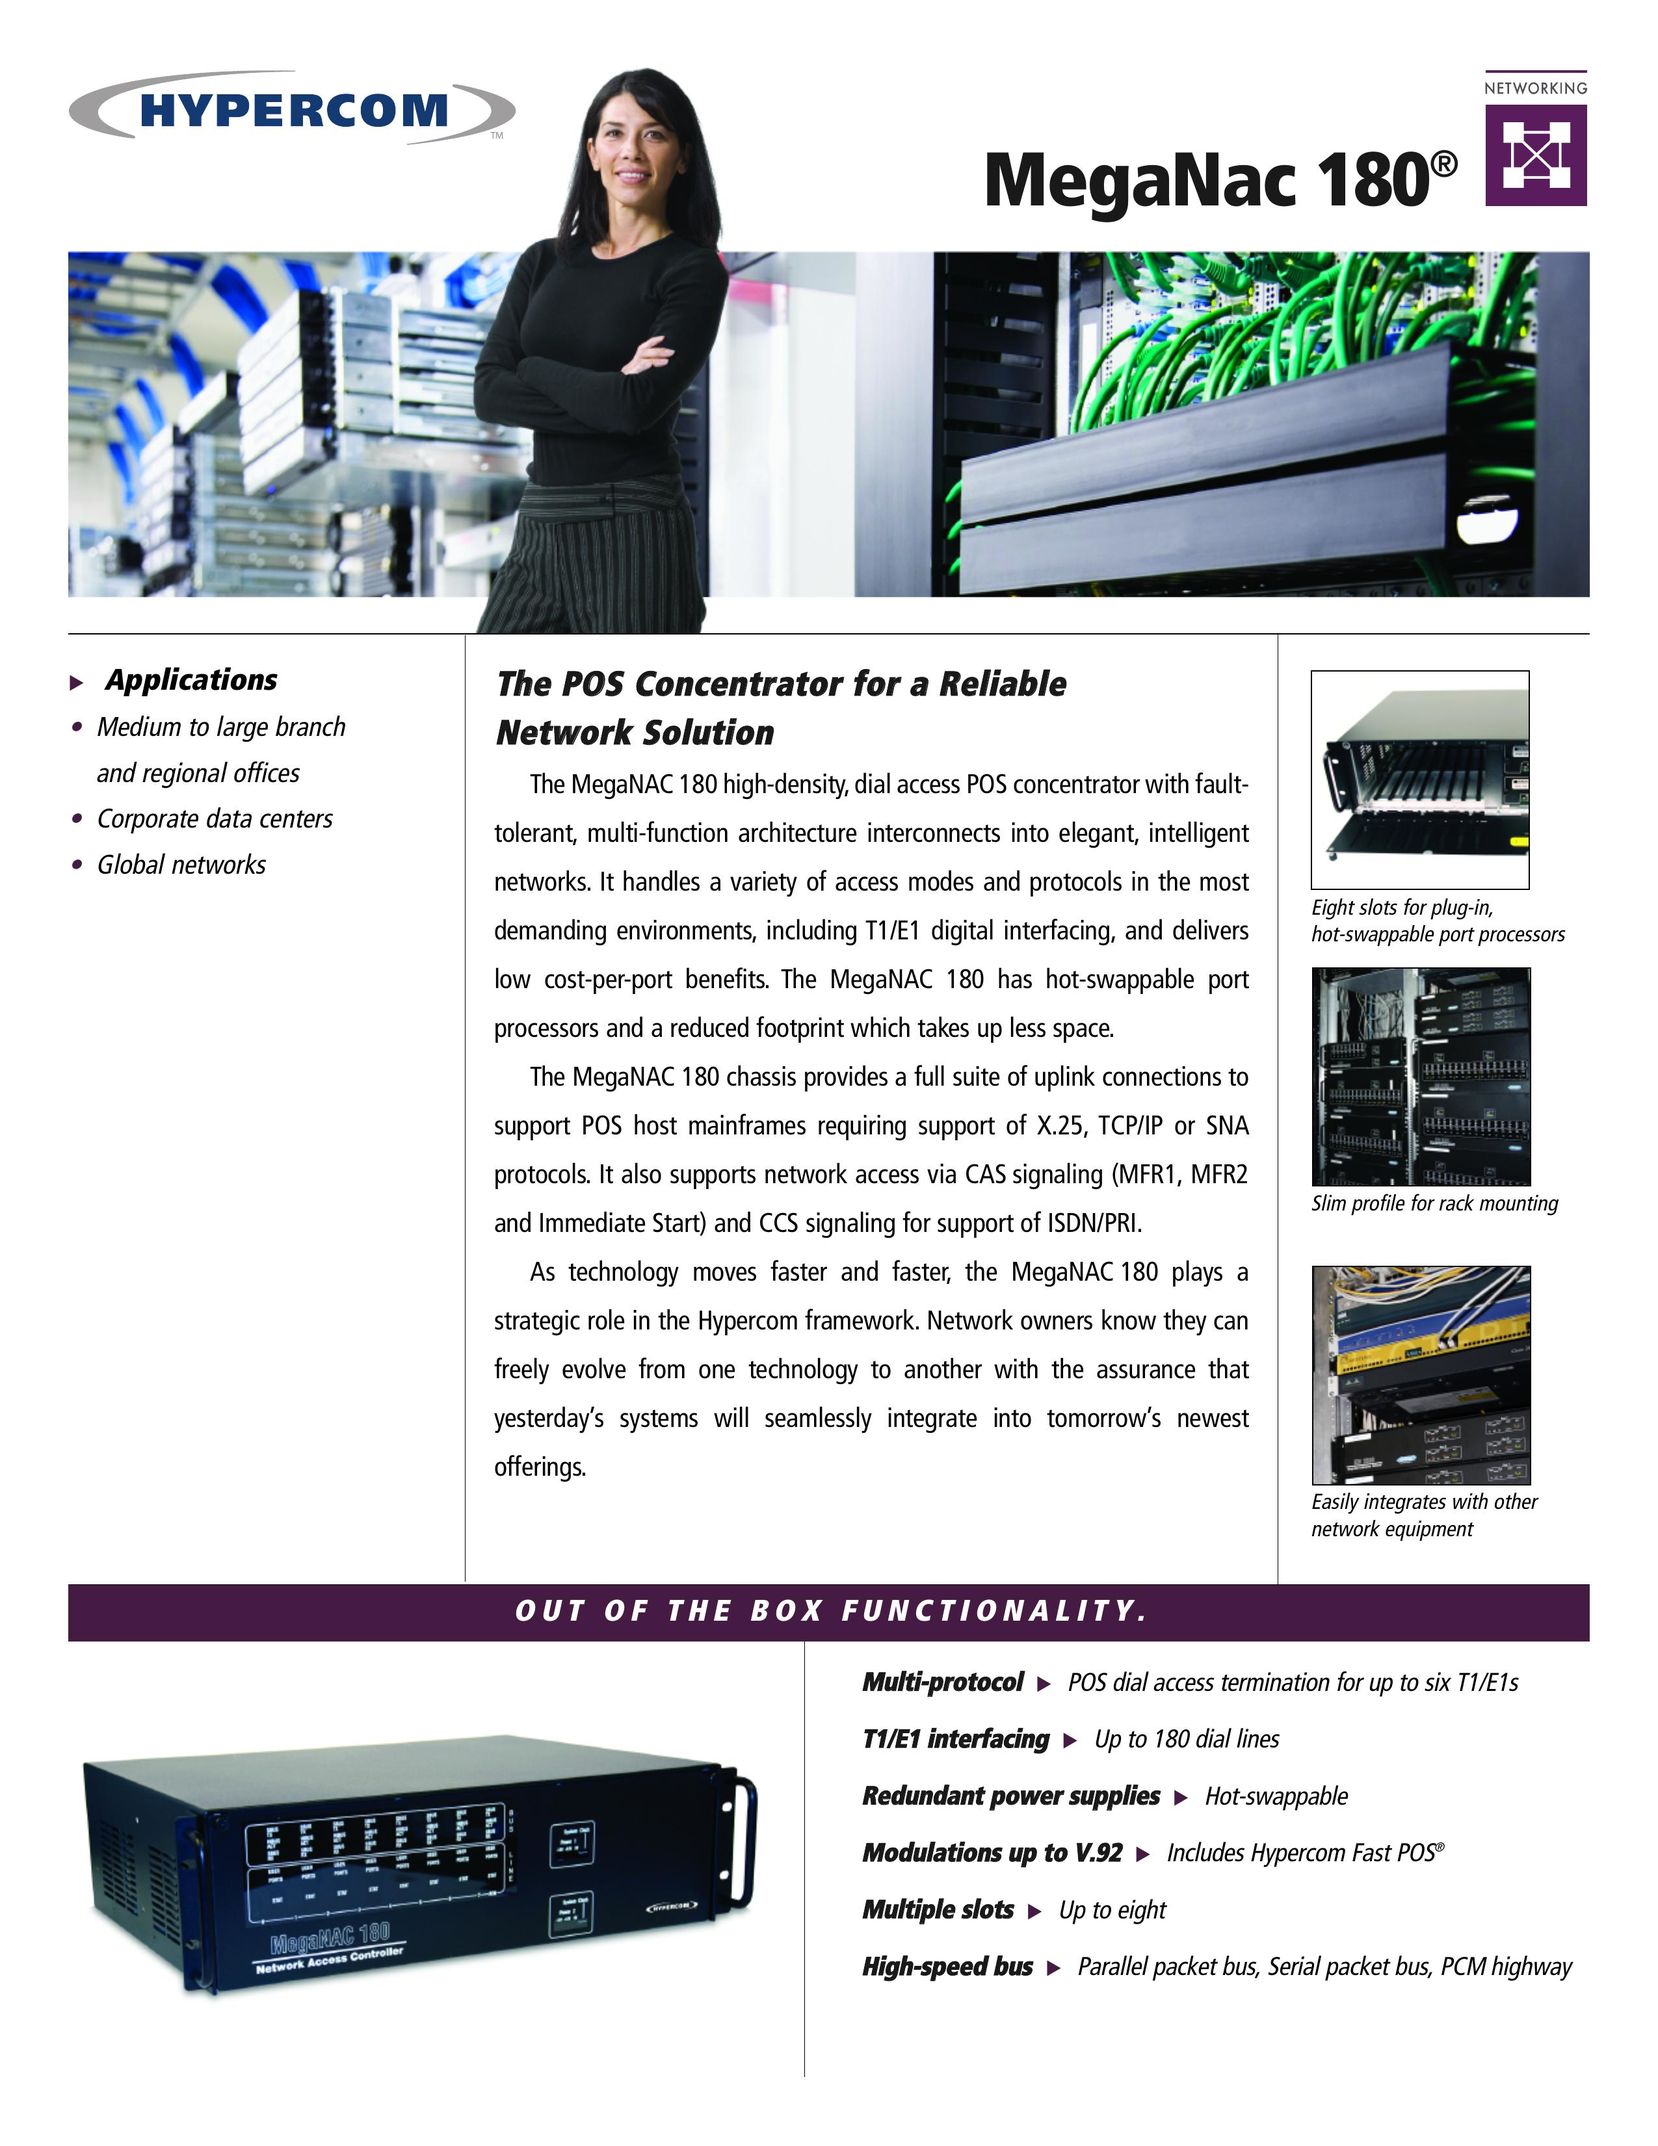 Hypercom MegaNAC 180 Network Router User Manual